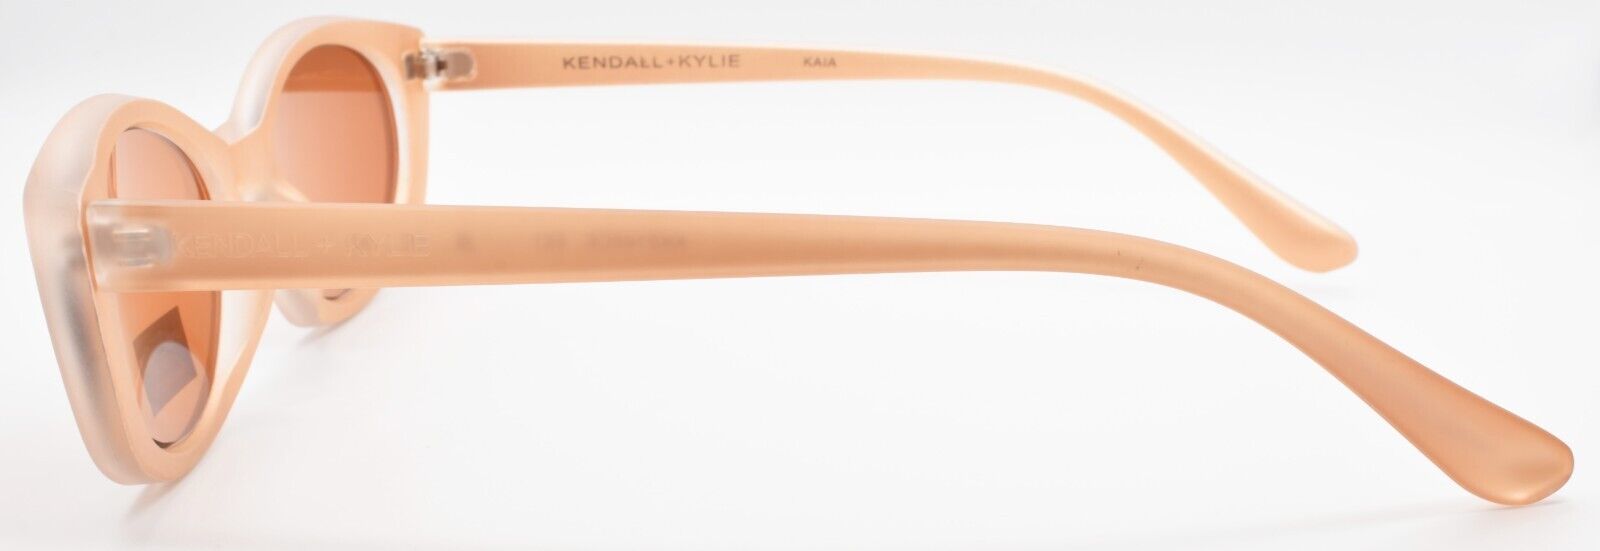 3-Kendall + Kylie Kaia KK5140CE 651 Women's Sunglasses Cateye Blush / Mirrored-800414557790-IKSpecs